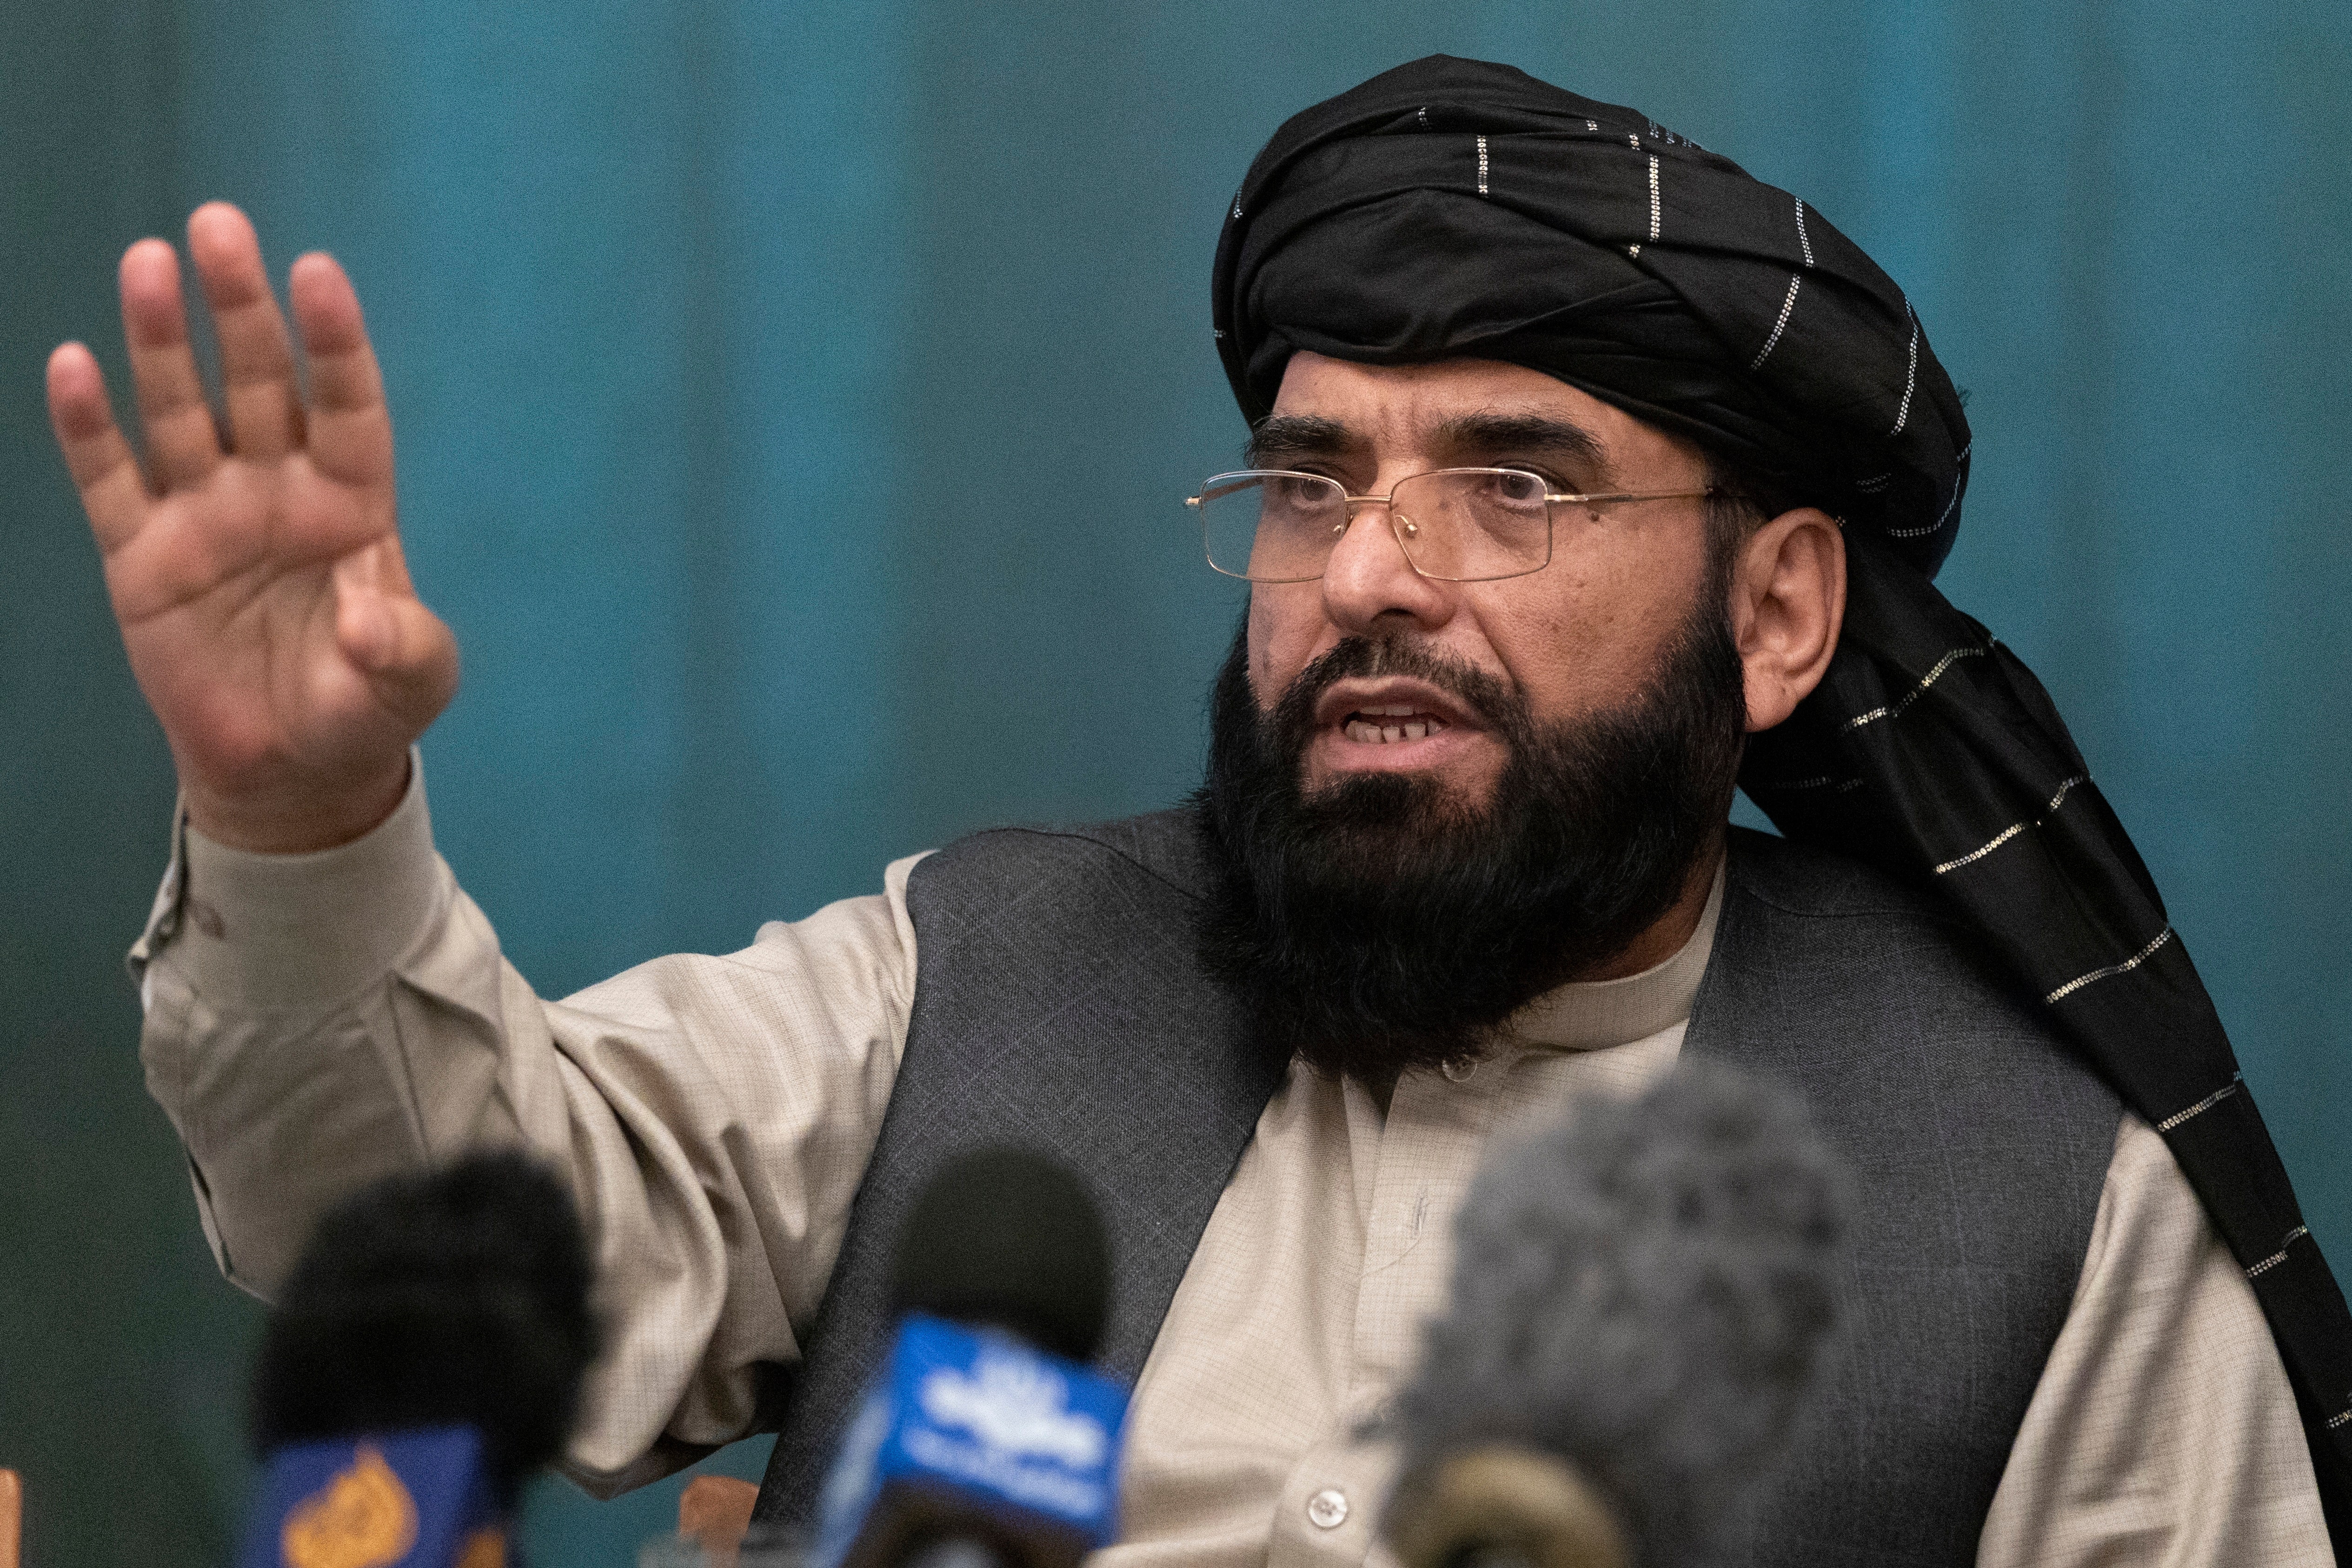 Taliban claims it was unaware al-Qaeda chief al-Zawahri was in Afghanistan before US drone strike